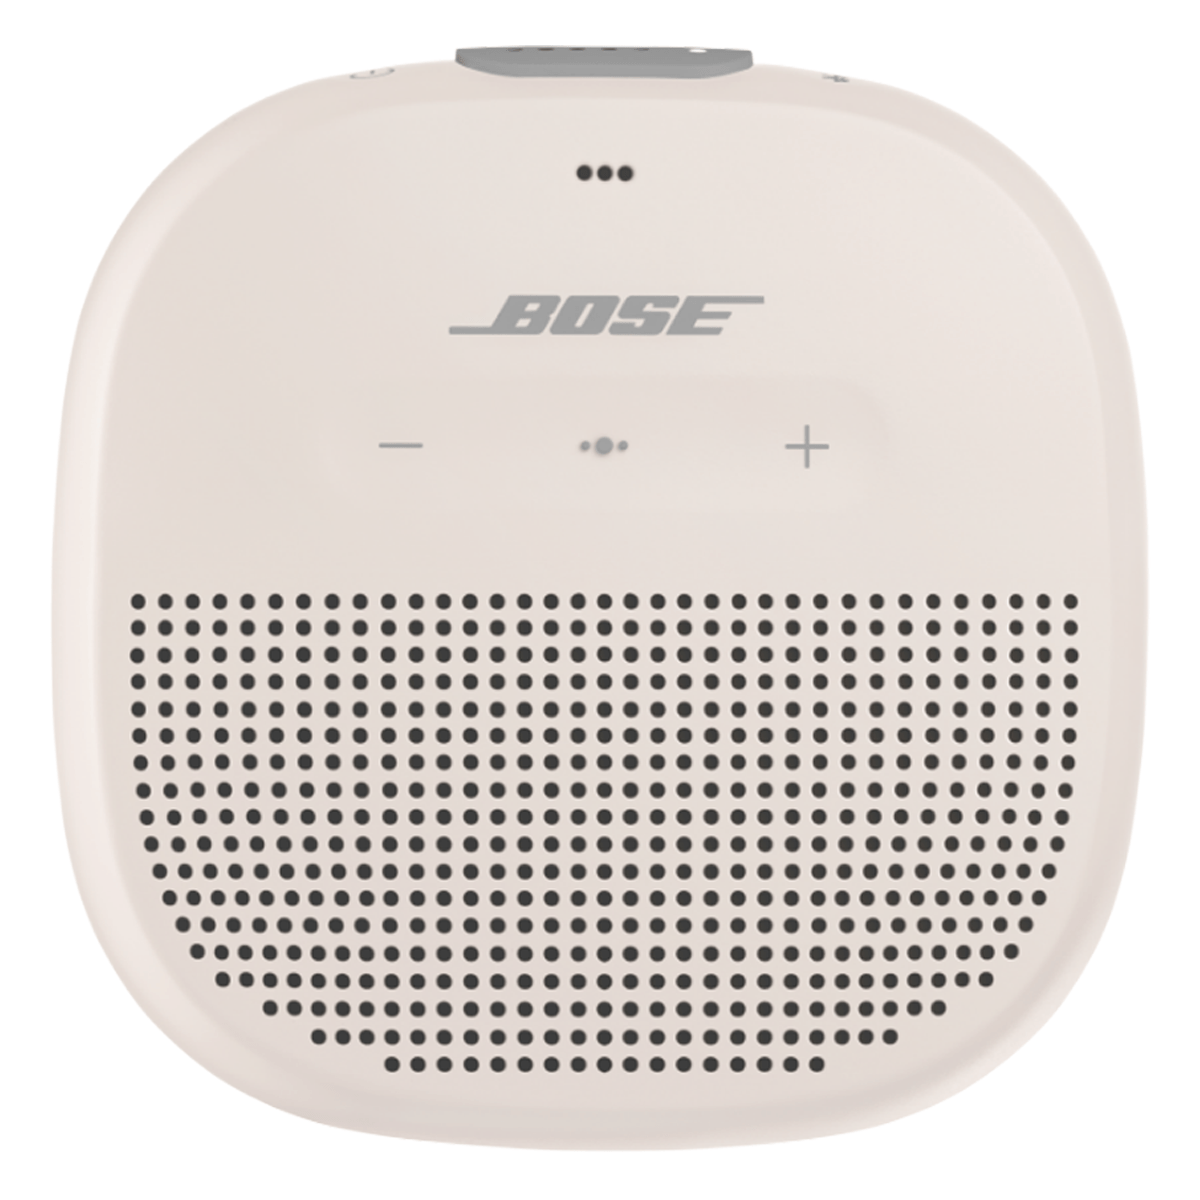 Altavoz Bluetooth SoundLink Micro de Bose